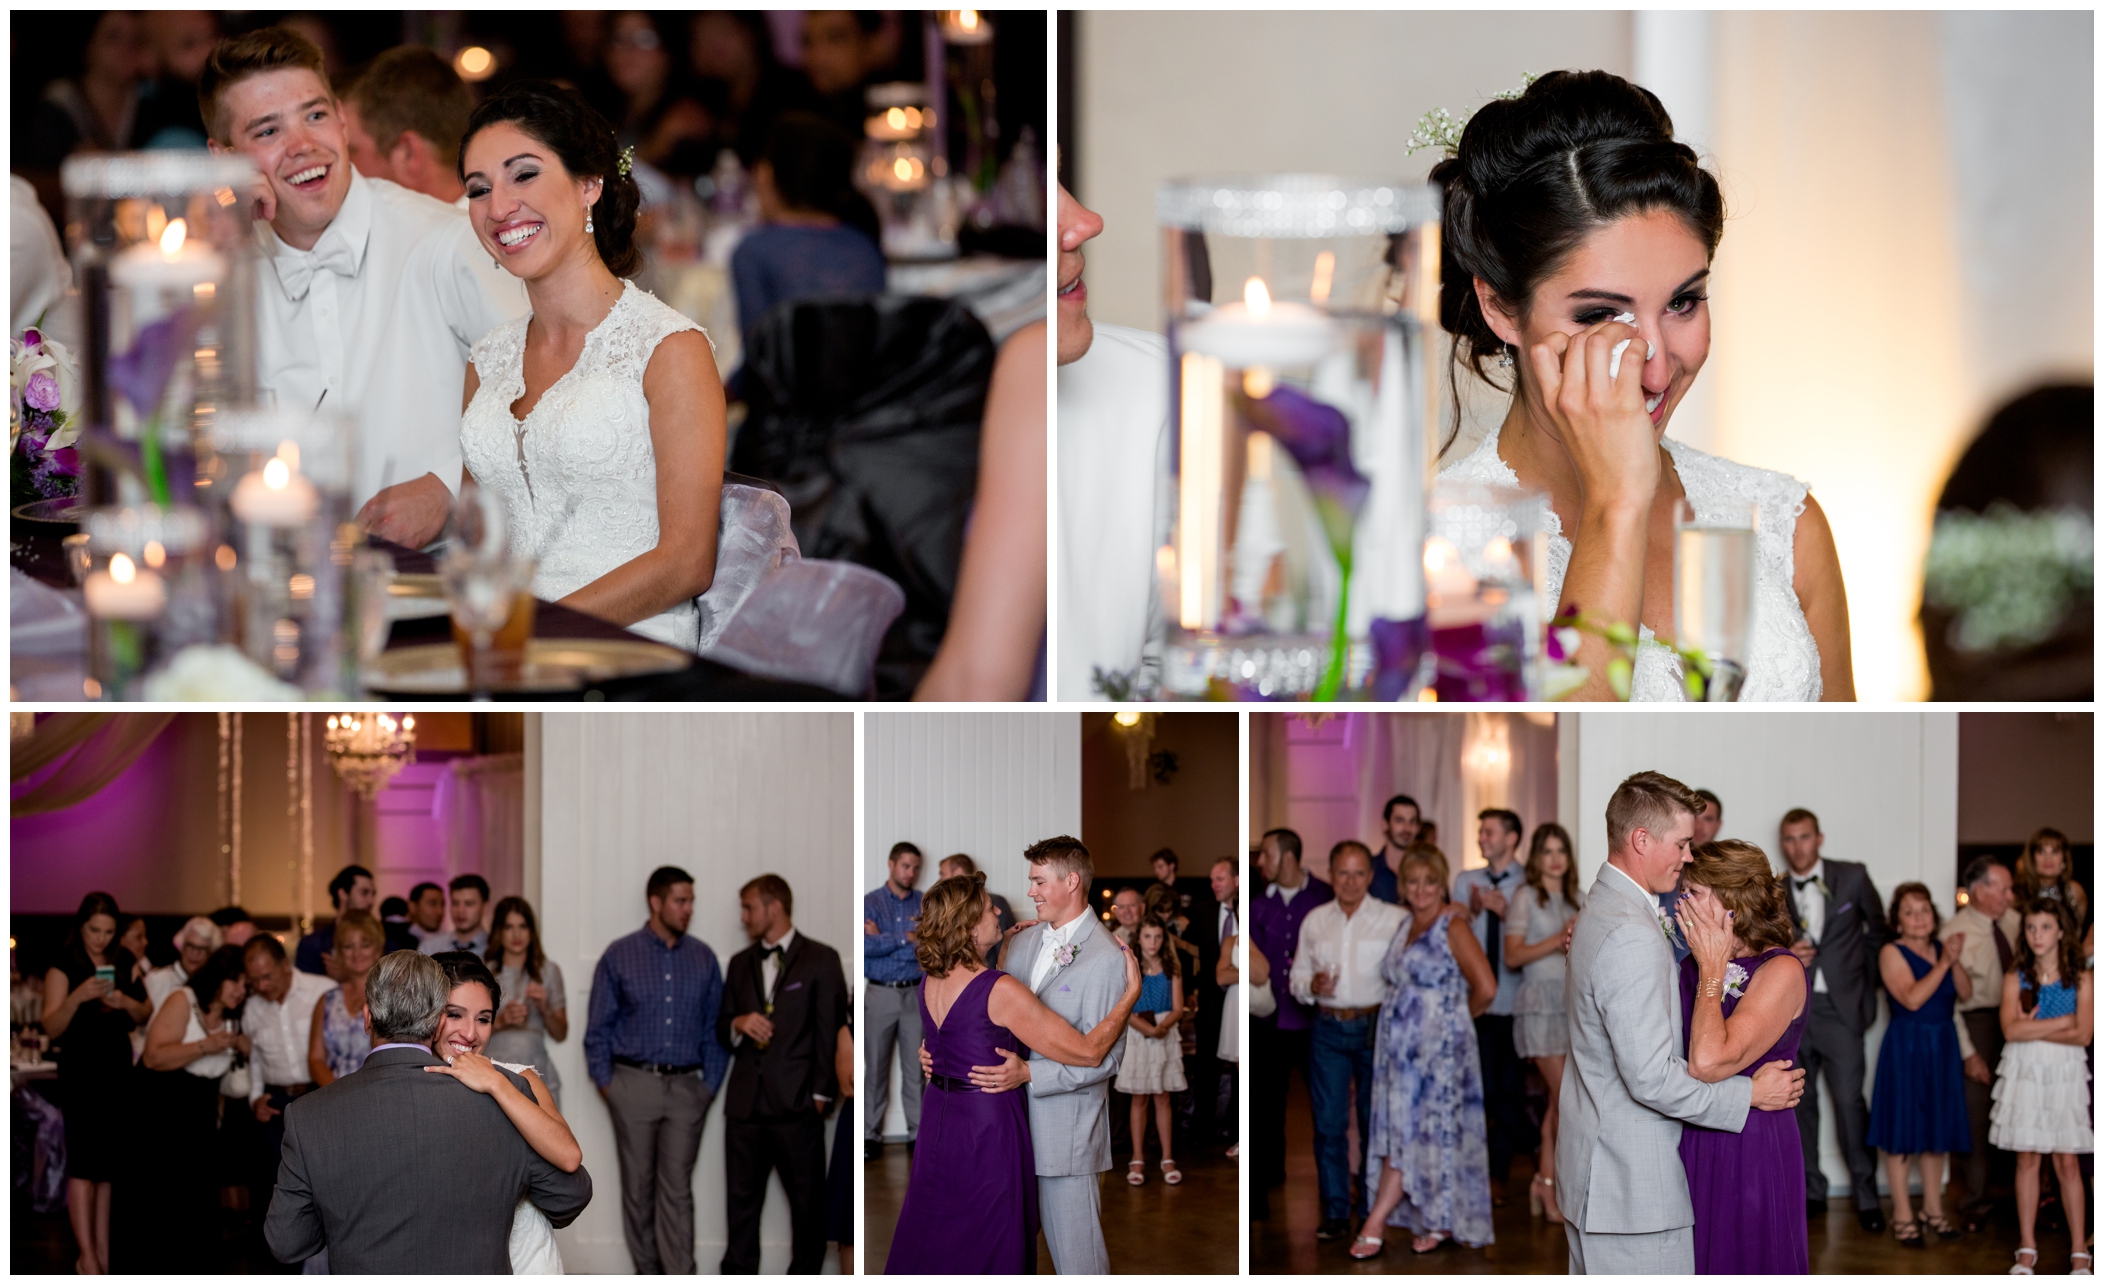 emotional wedding toasts during a Colorado ballroom wedding reception 